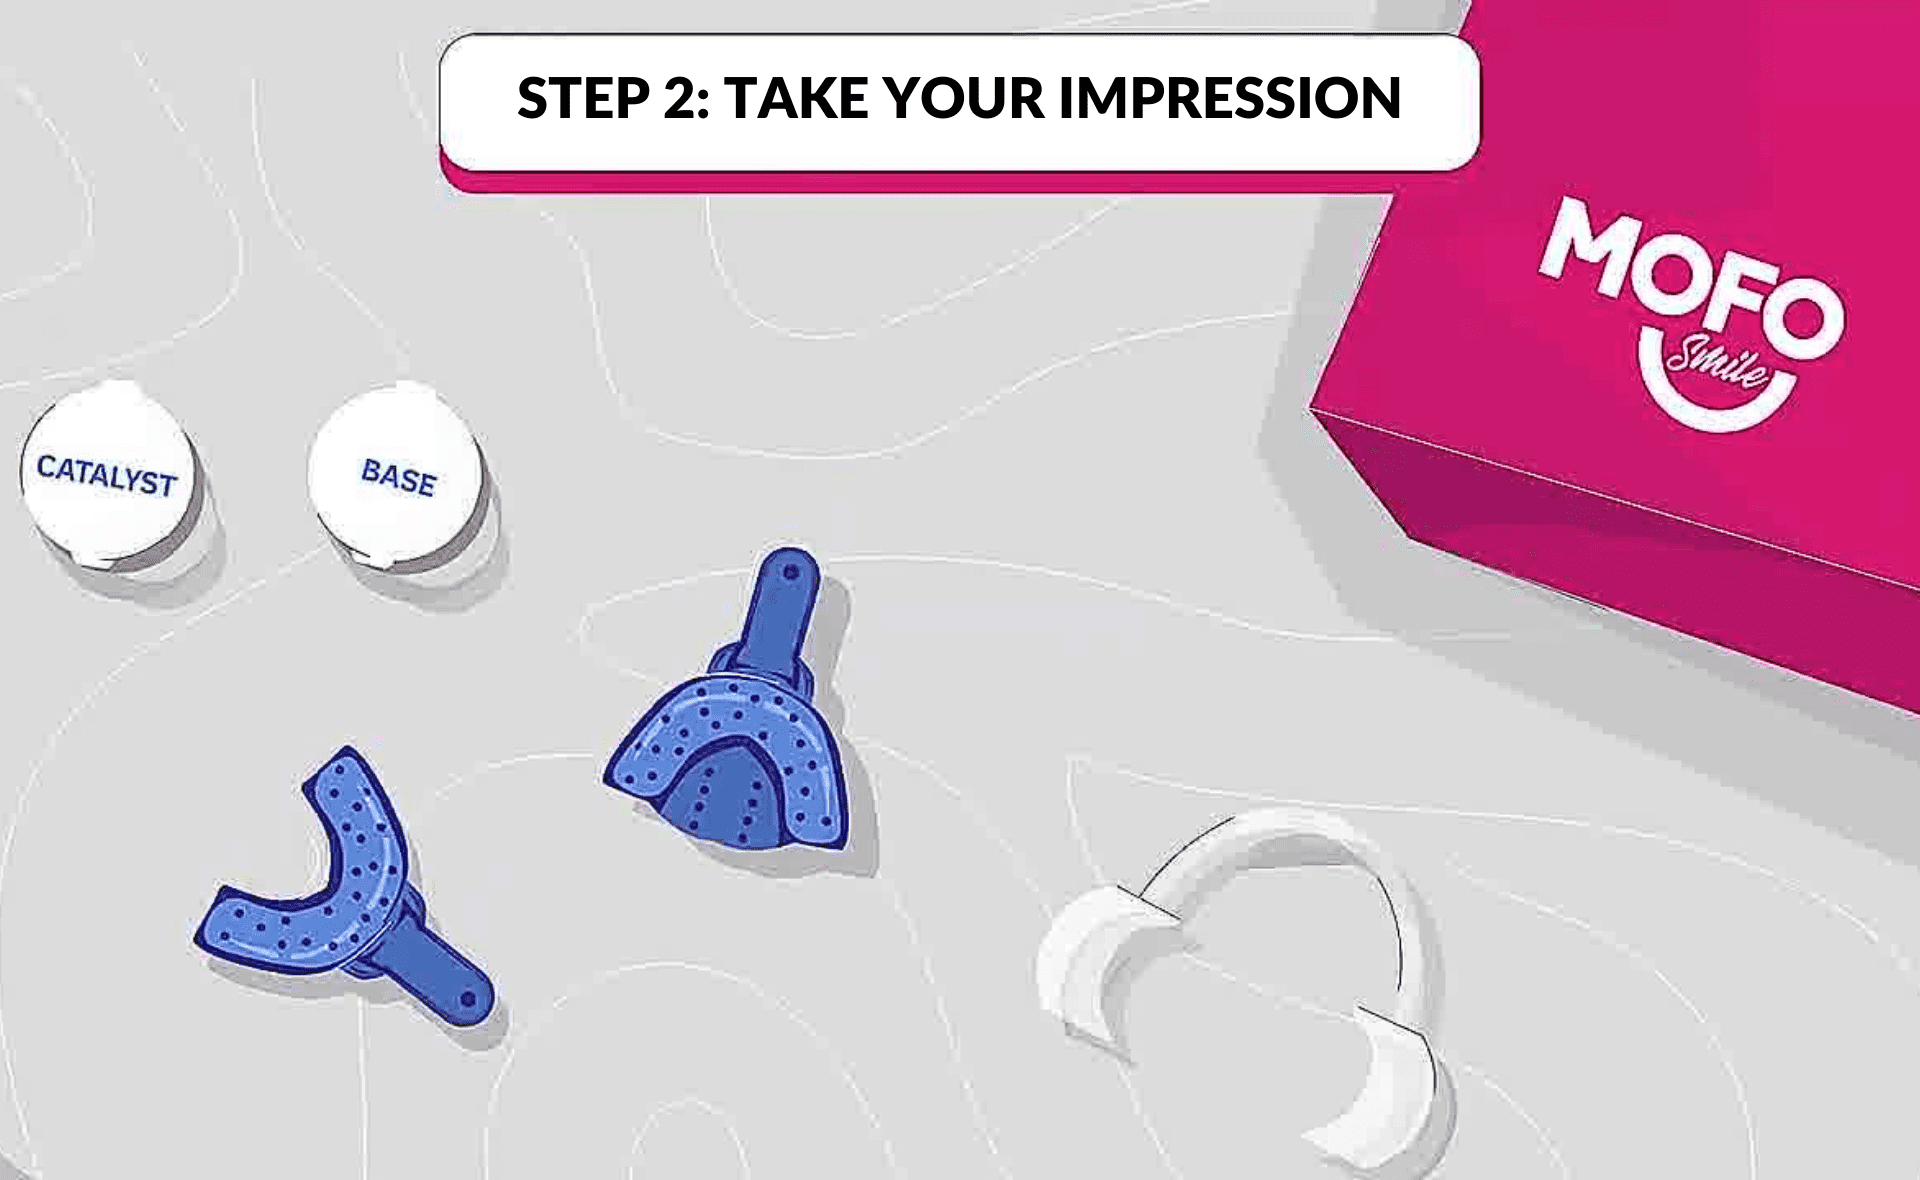 Step 2: Take Your Impression